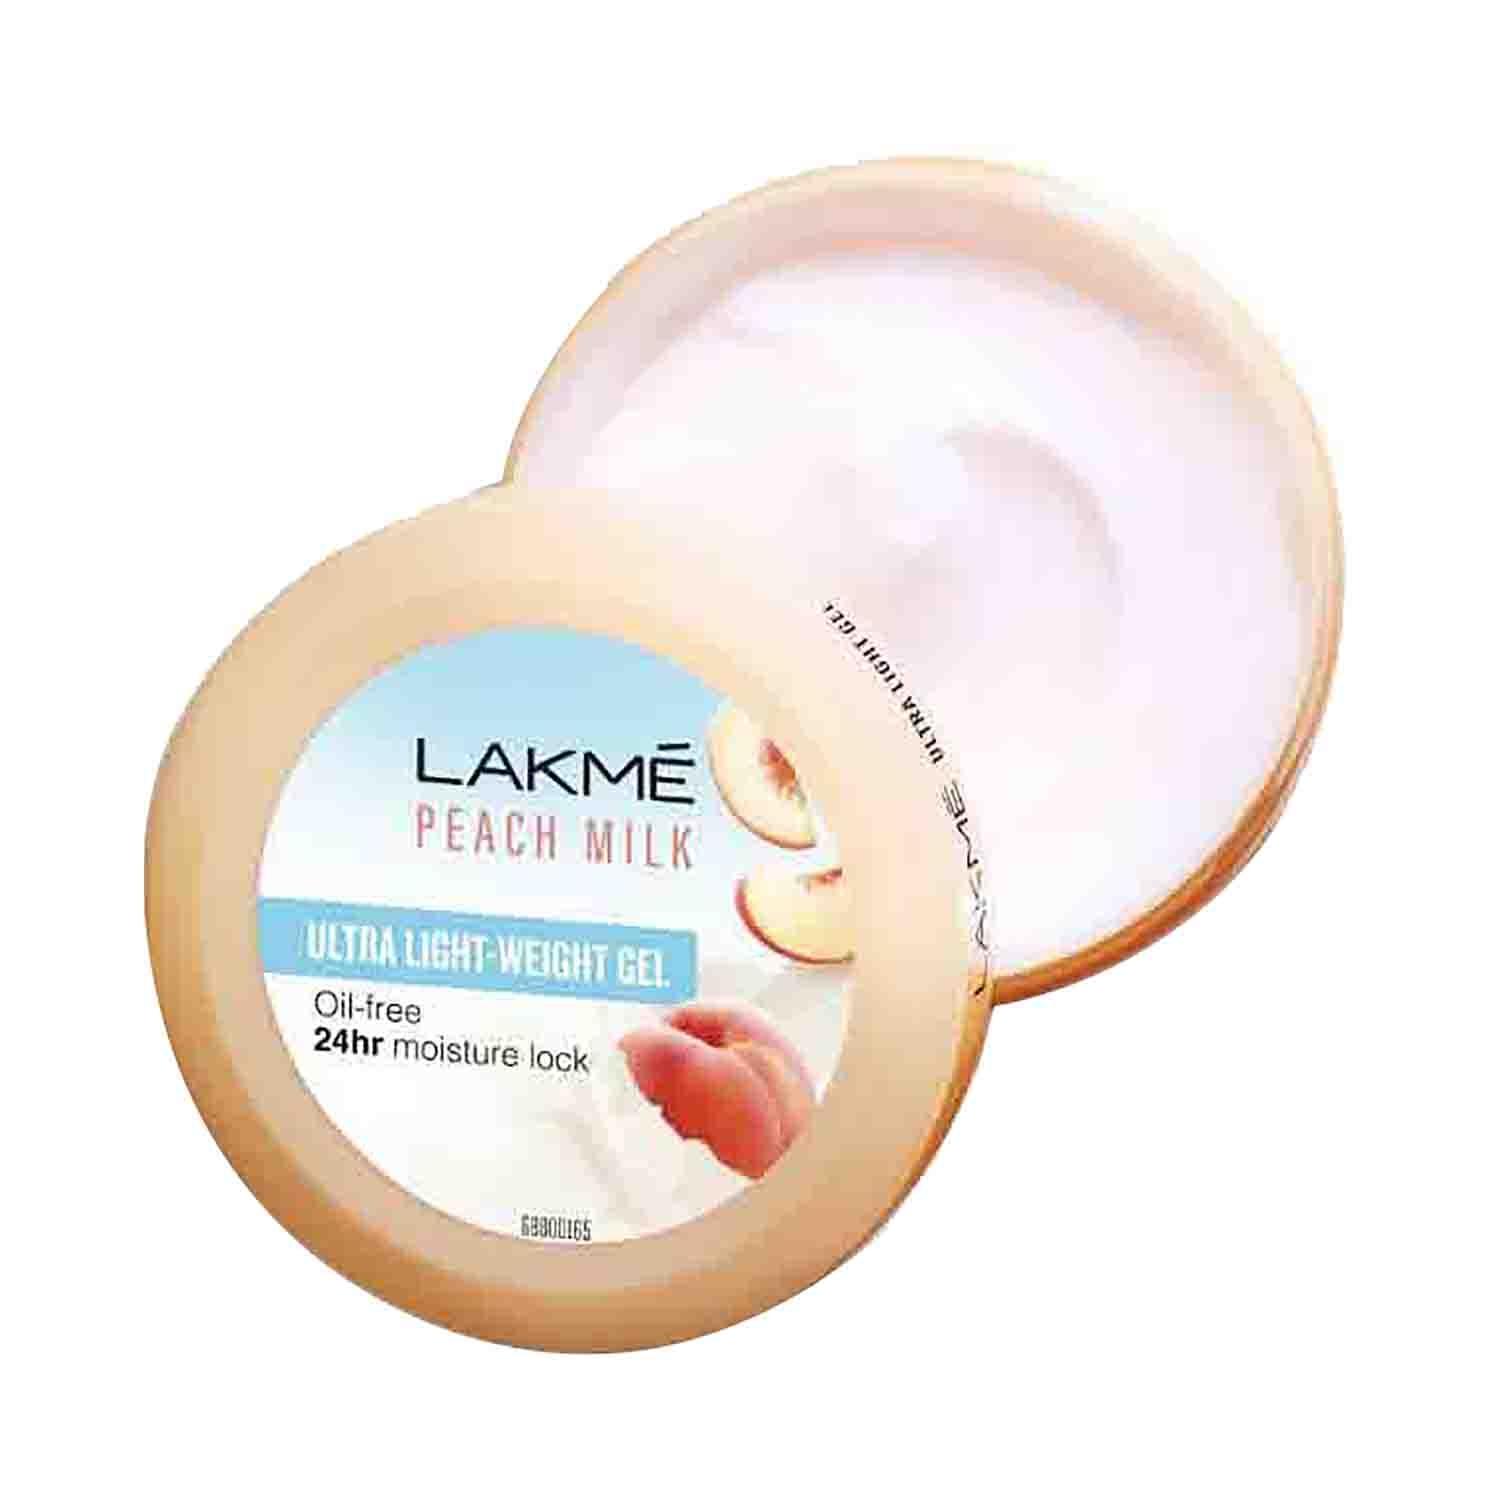 lakme peach milk ultra light gel (50g)